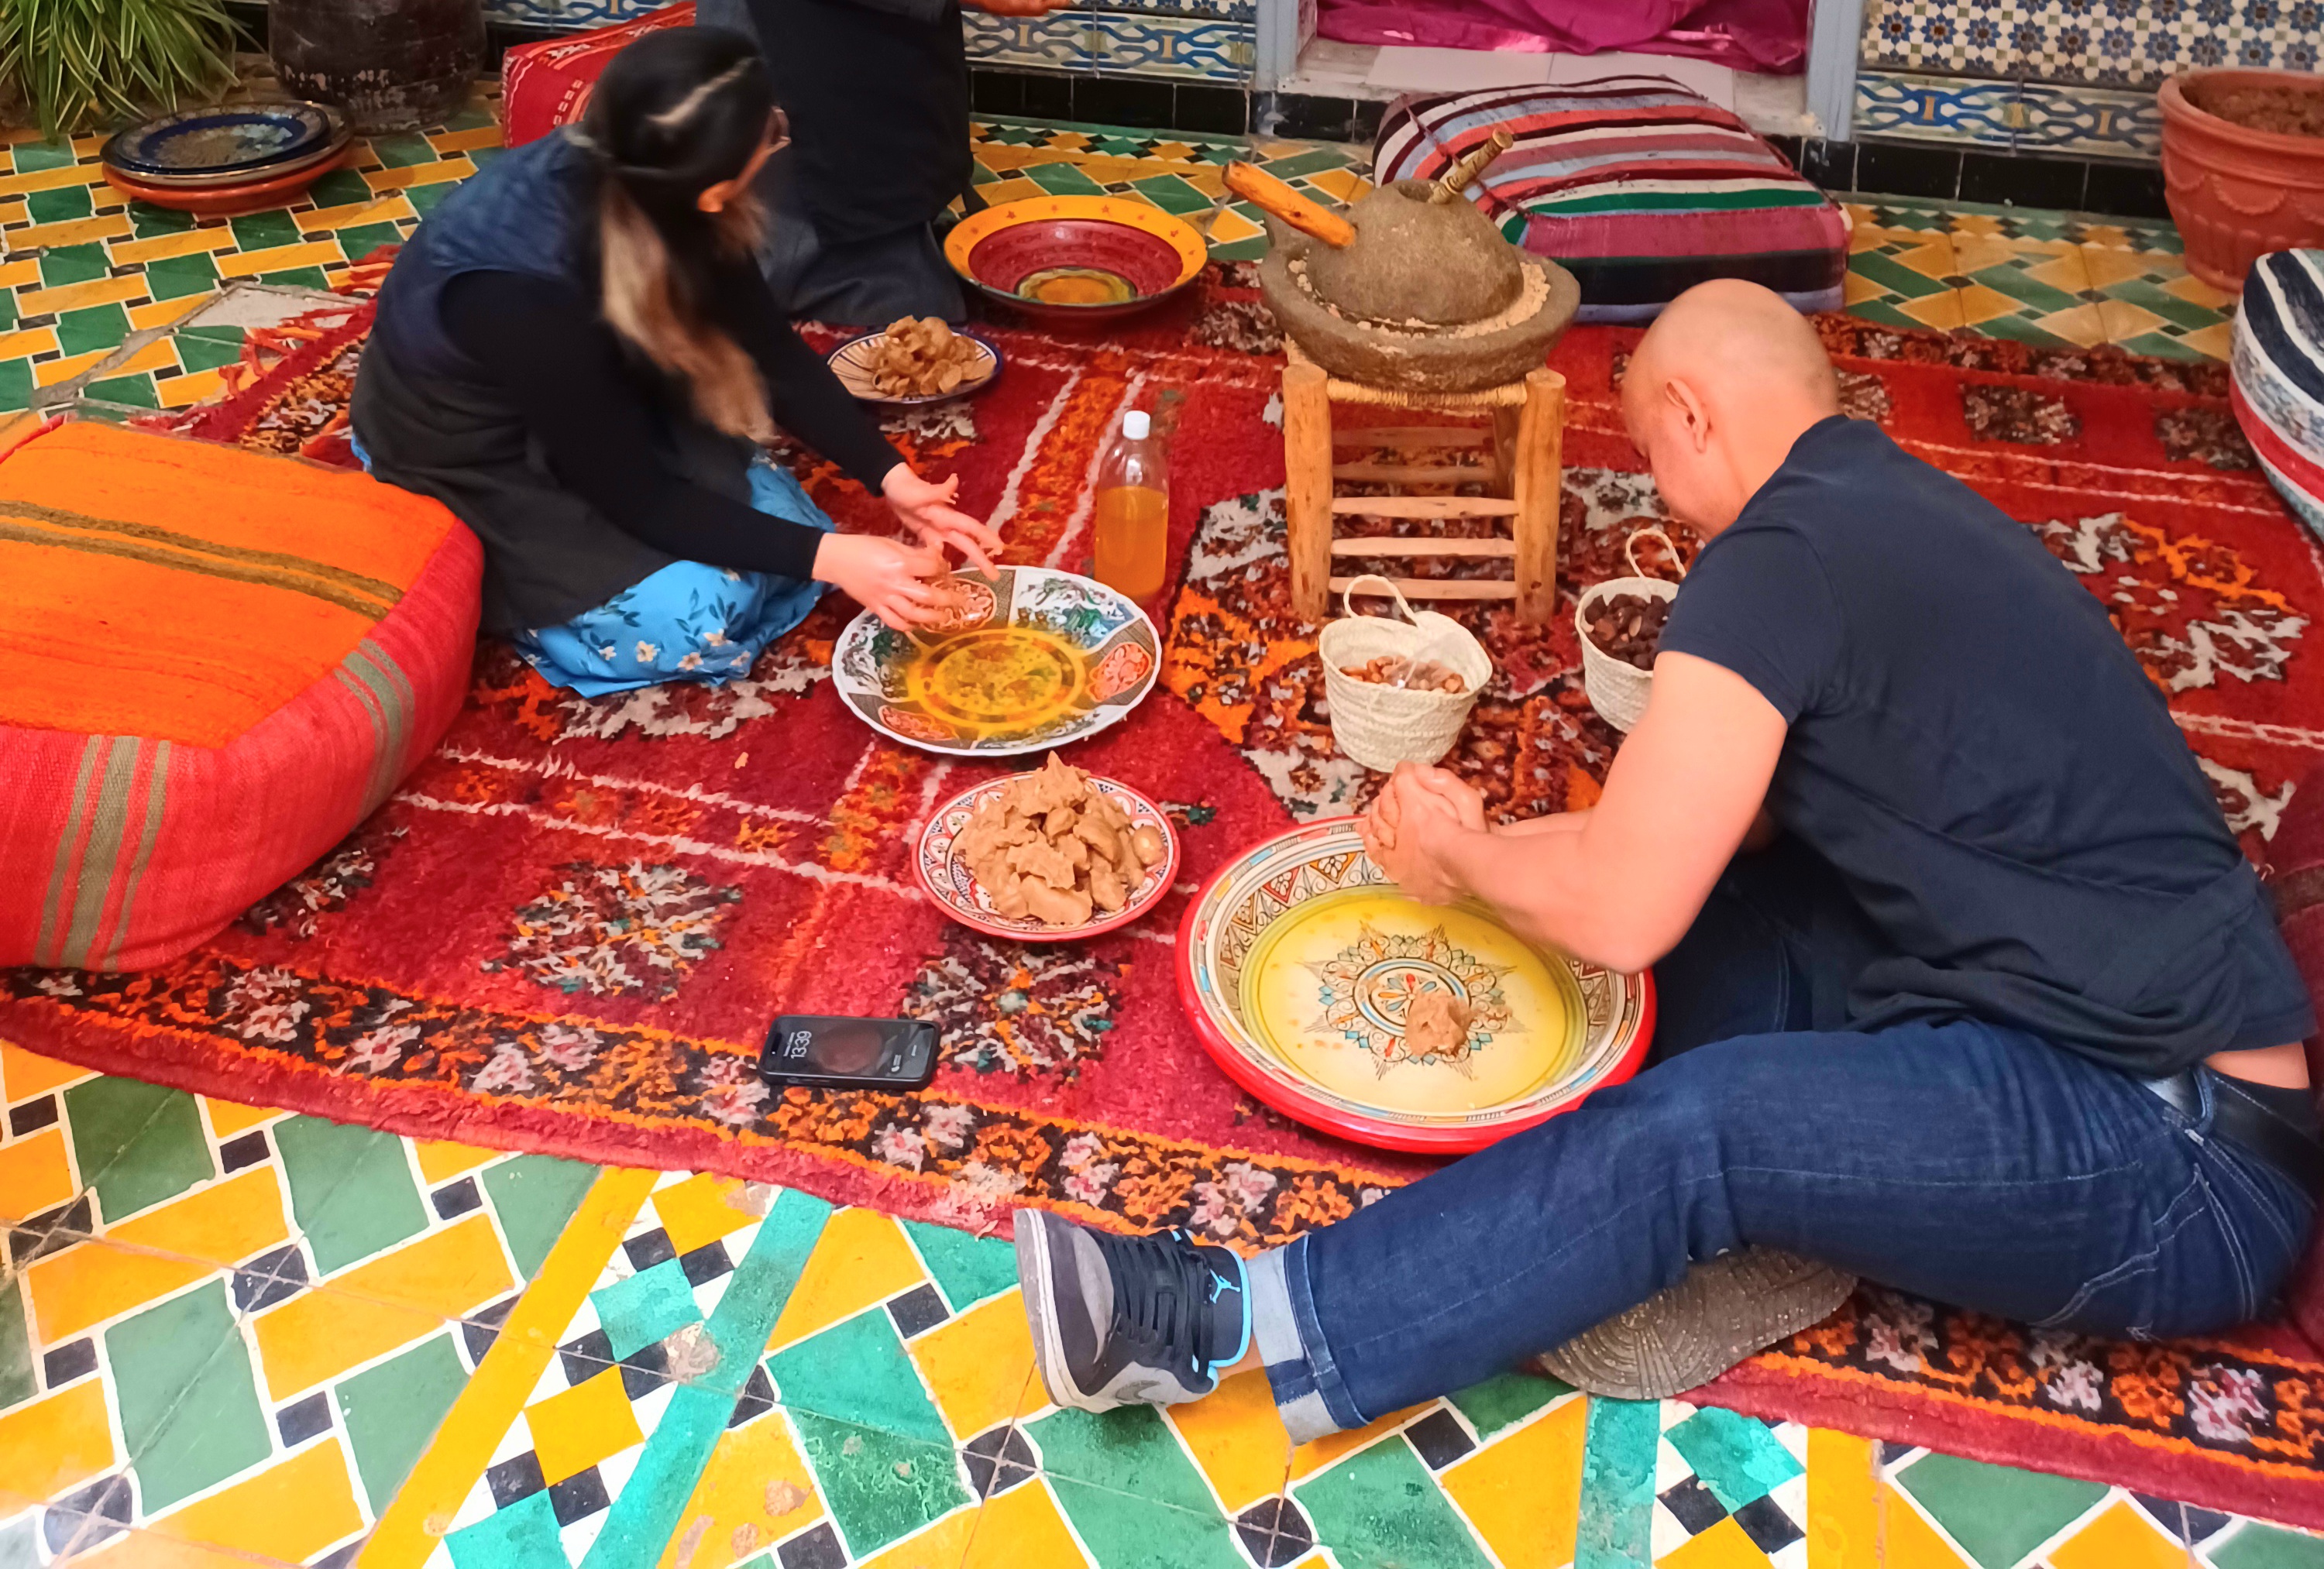 Making argan oil Marrakech
Airbnb Experience